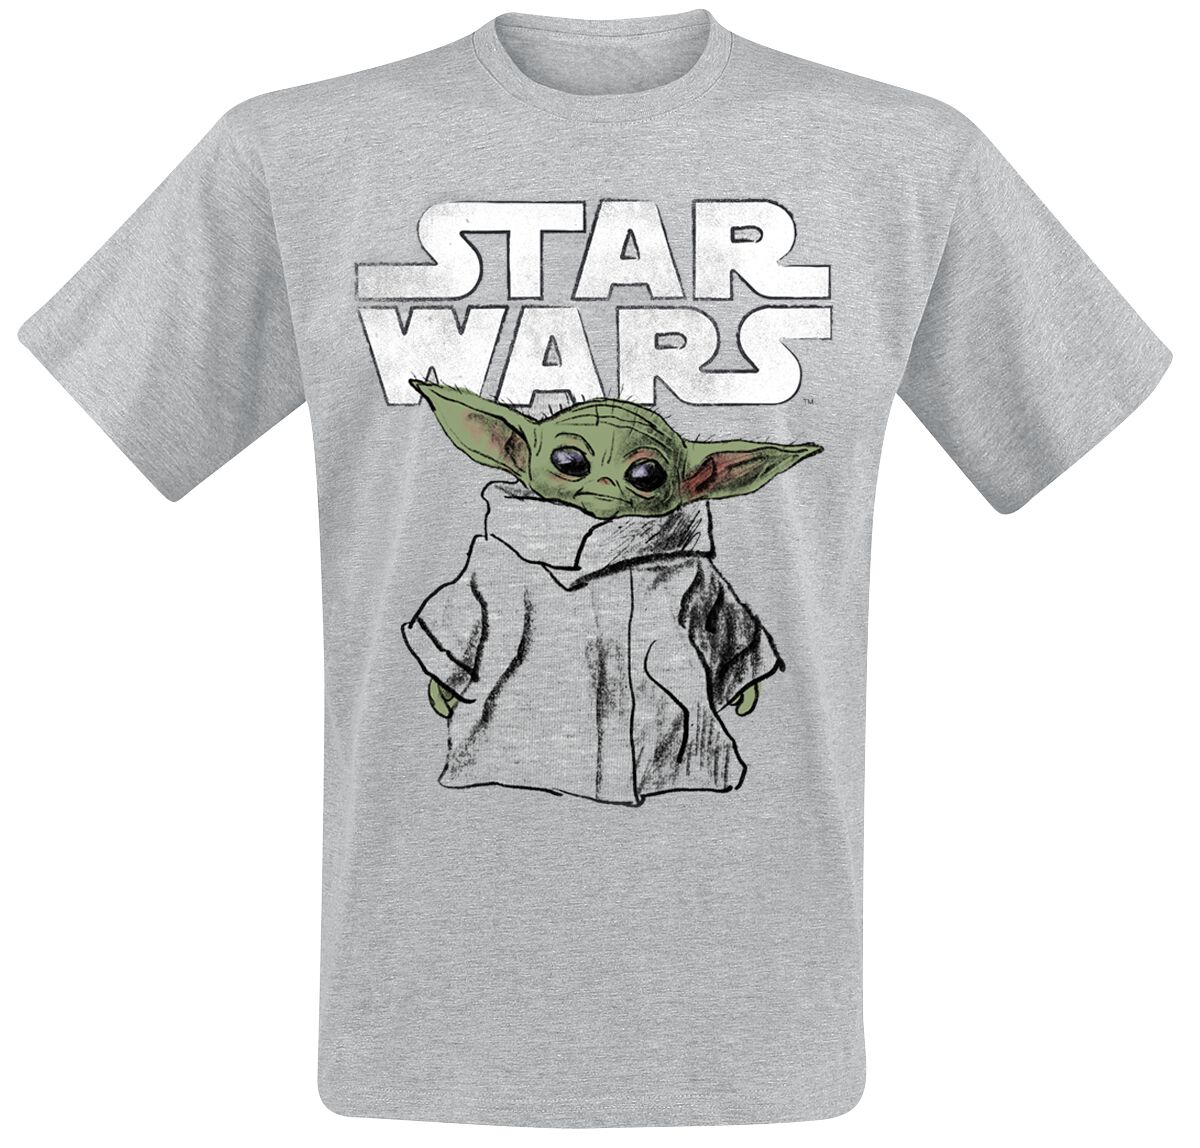 Star Wars T-Shirt - The Mandalorian - Grogu - Sketch - S bis 4XL - für Männer - Größe XXL - grau meliert  - Lizenzierter Fanartikel